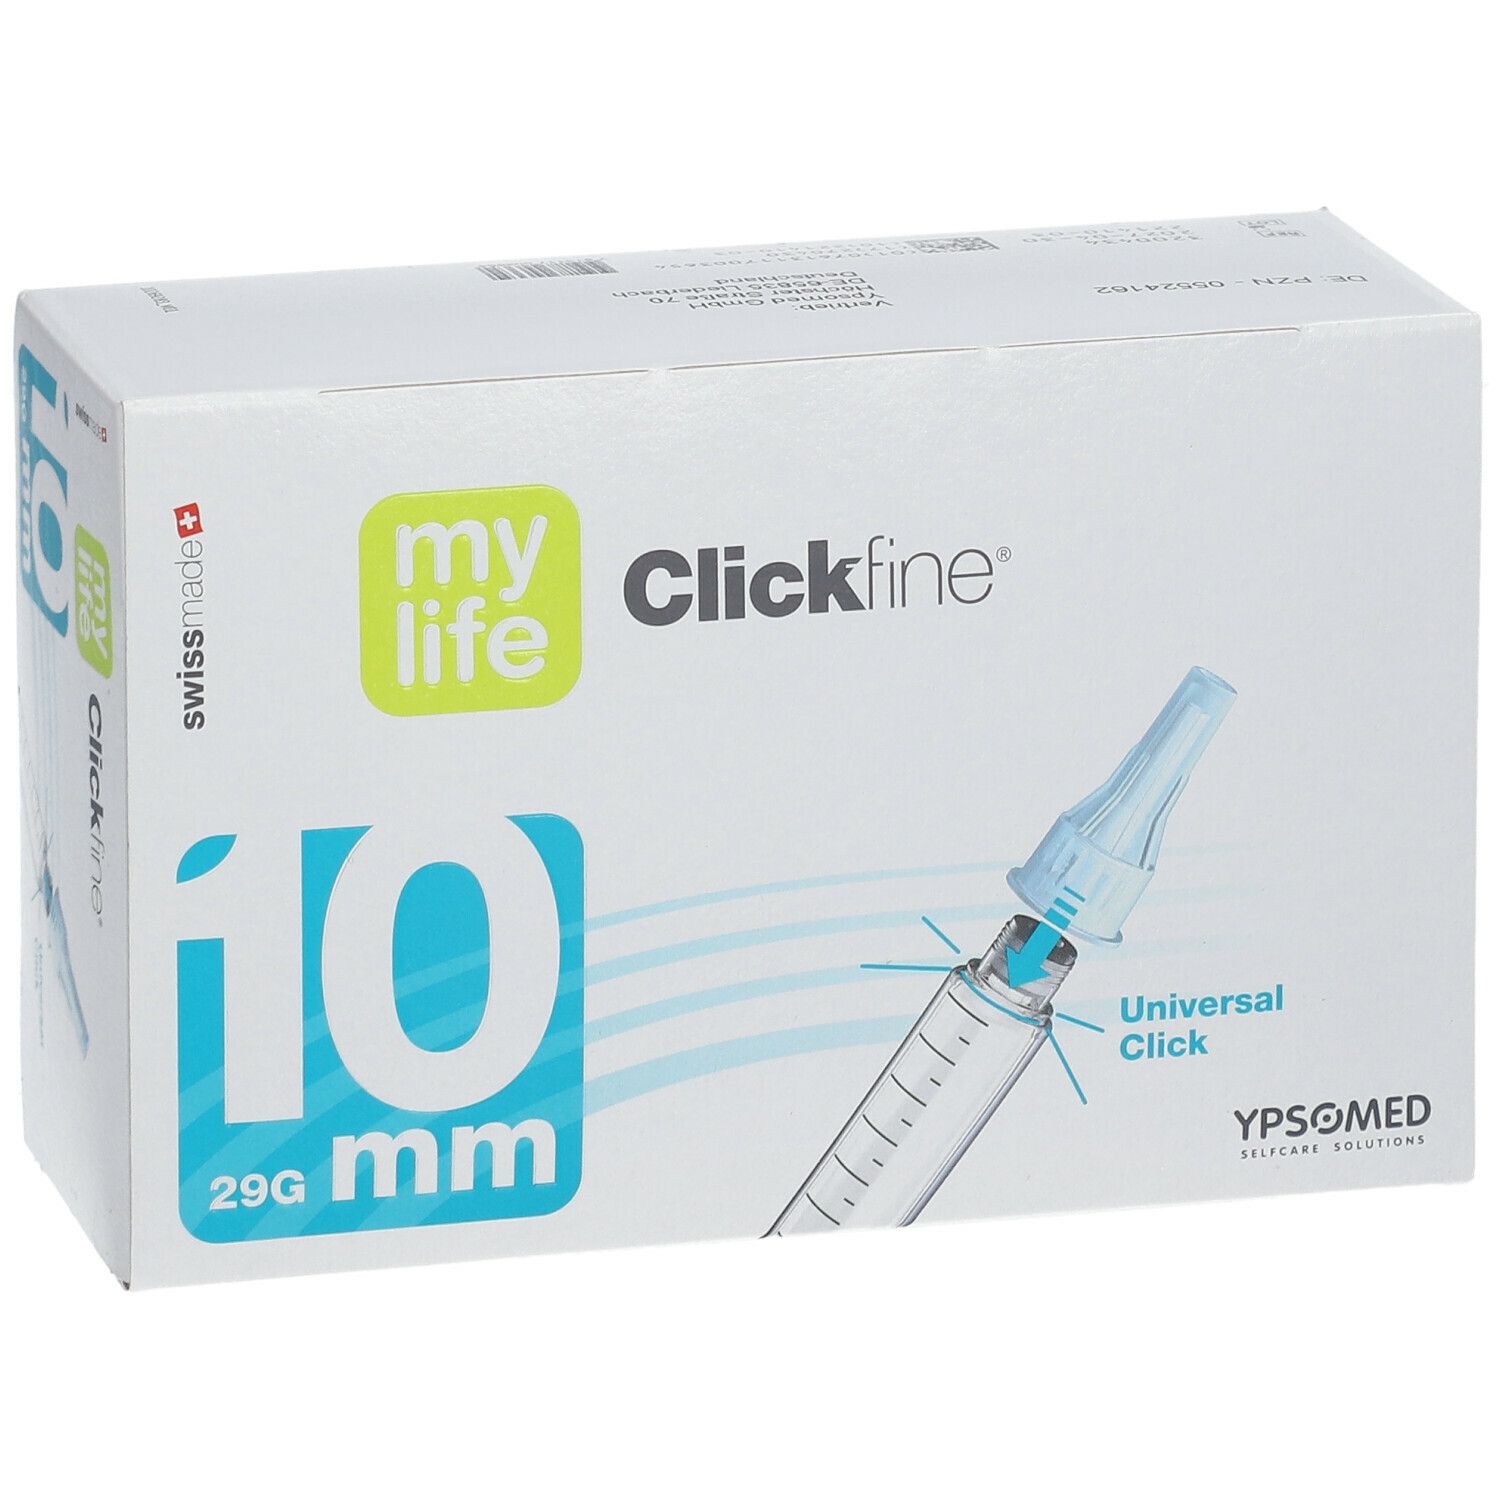 mylife Clickfine® 10 mm Kanülen